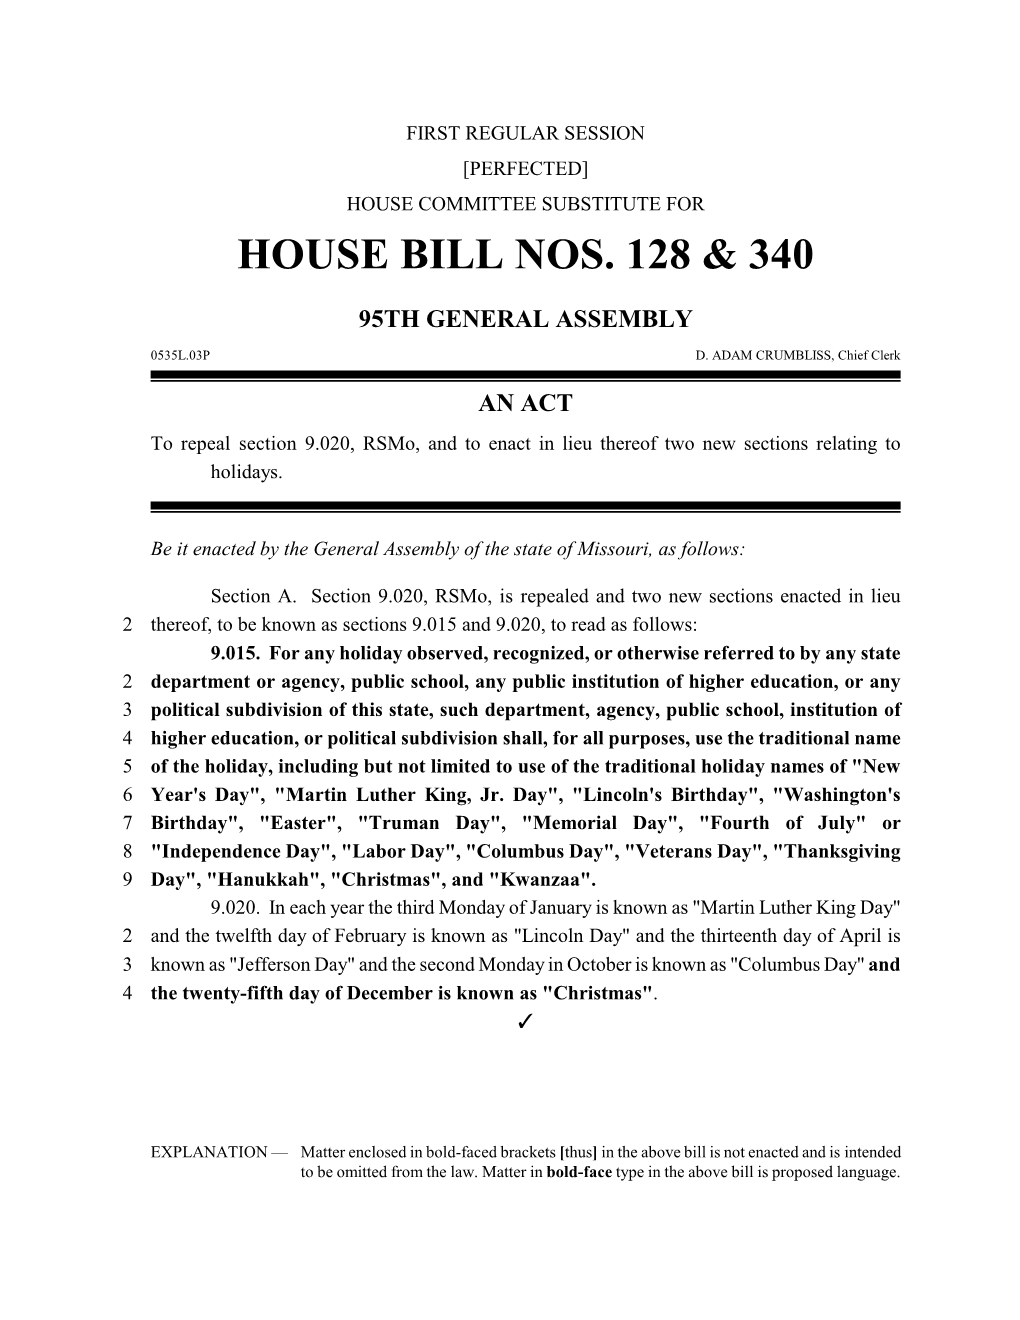 House Bill Nos. 128 &